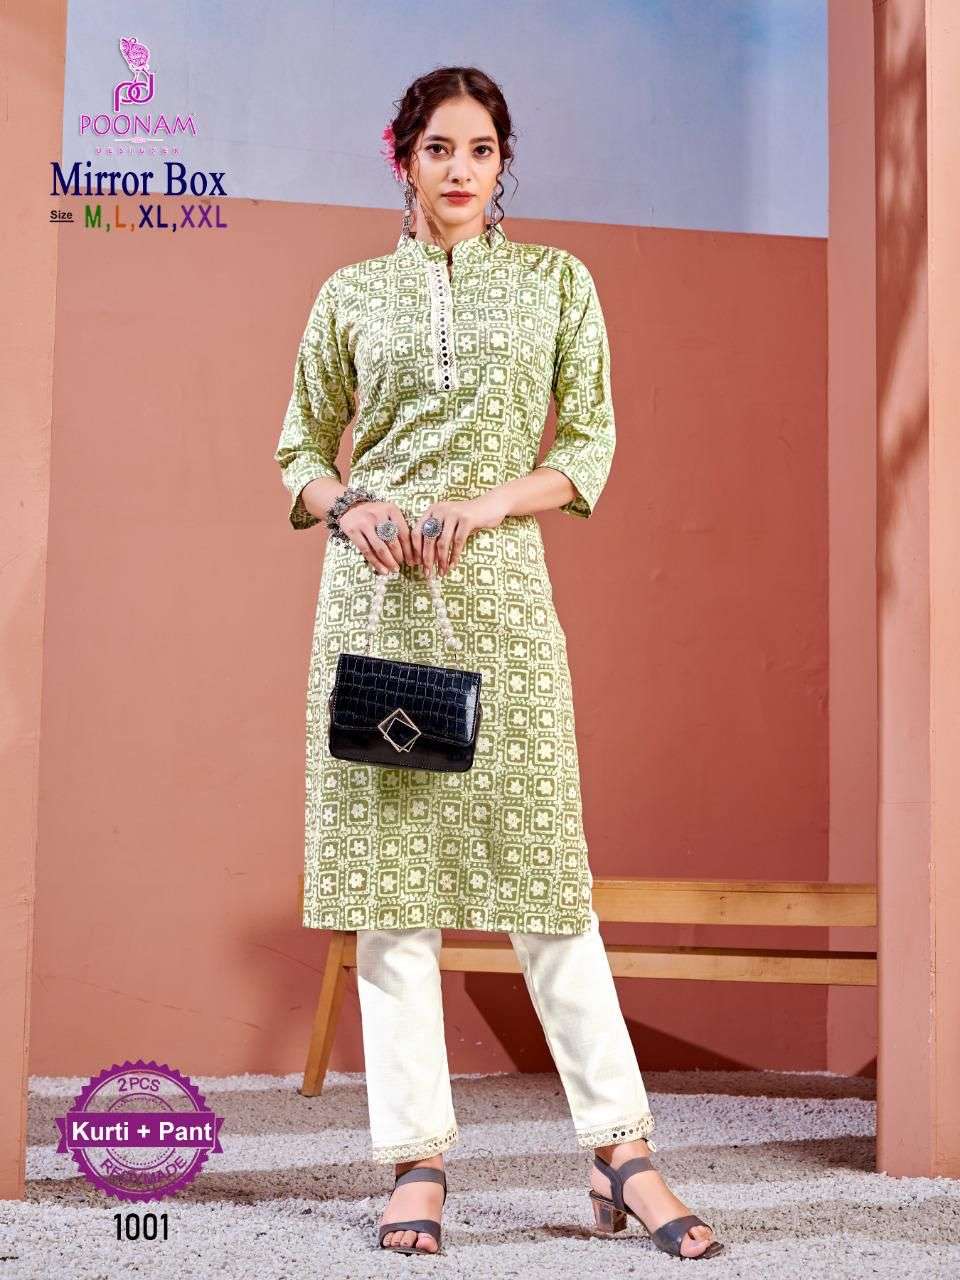 poonam designer mirror box shiffli designer kurtis with bottom set wholesale price surat